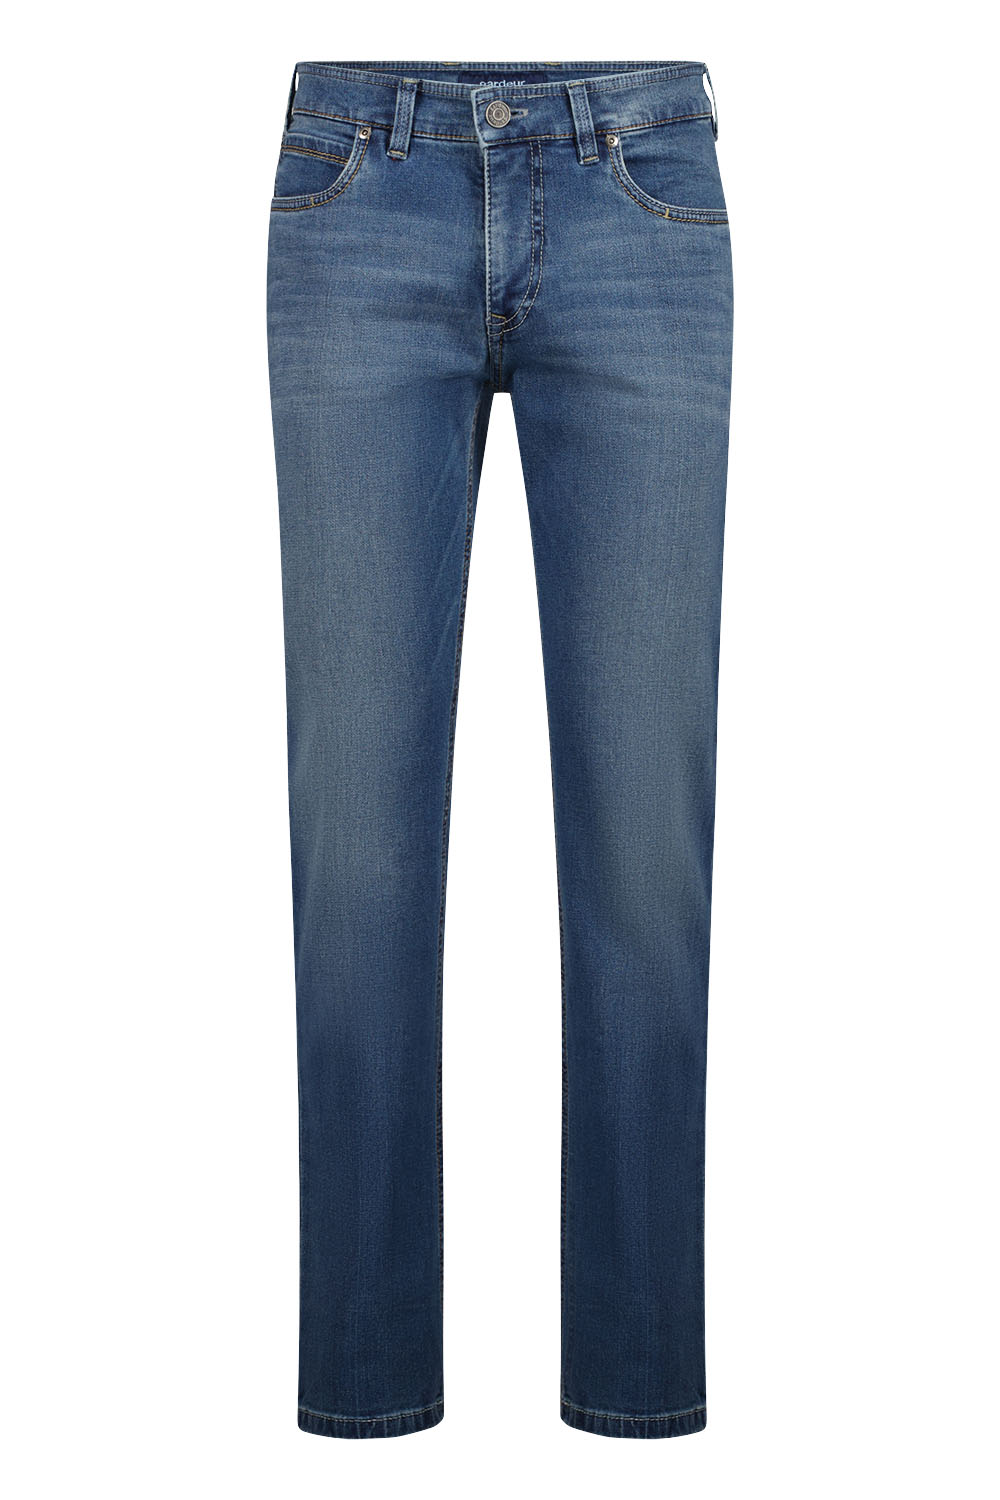 Gardeur - Batu-2 Modern Fit 5-Pocket Jeans Indigo - 33/36 - Heren